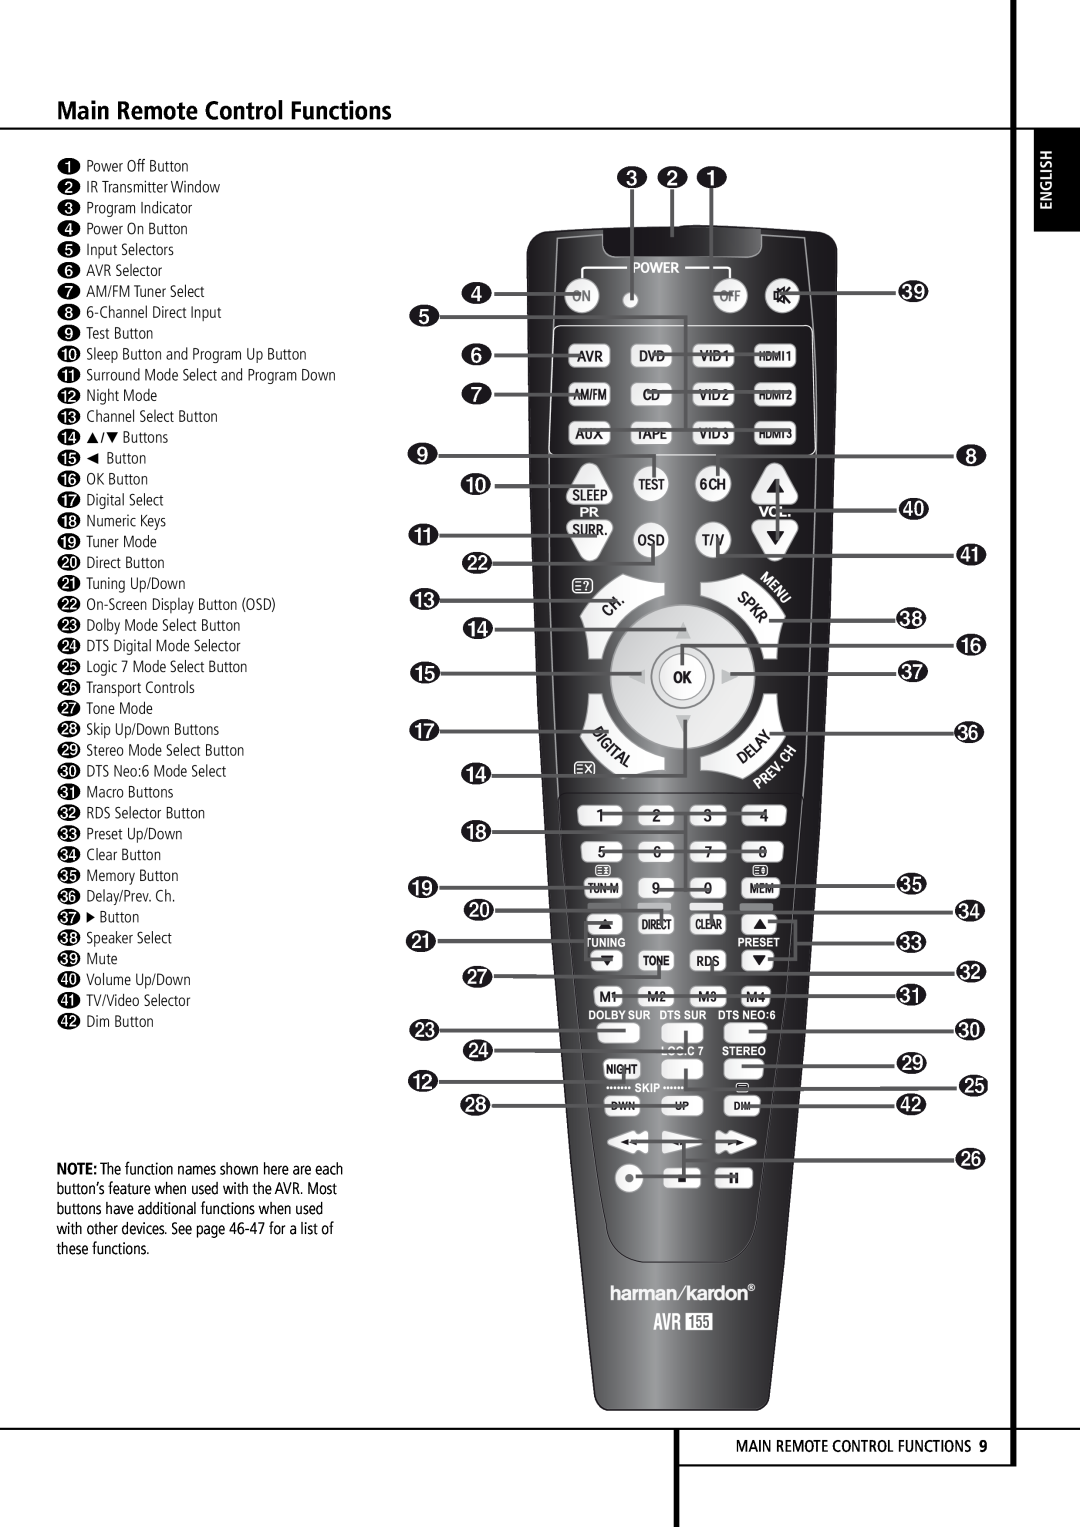 Harman-Kardon AVR 155 owner manual Main Remote Control Functions, 2 1 3 4, A L C D E G D H, J K Q M N Bo P, English 